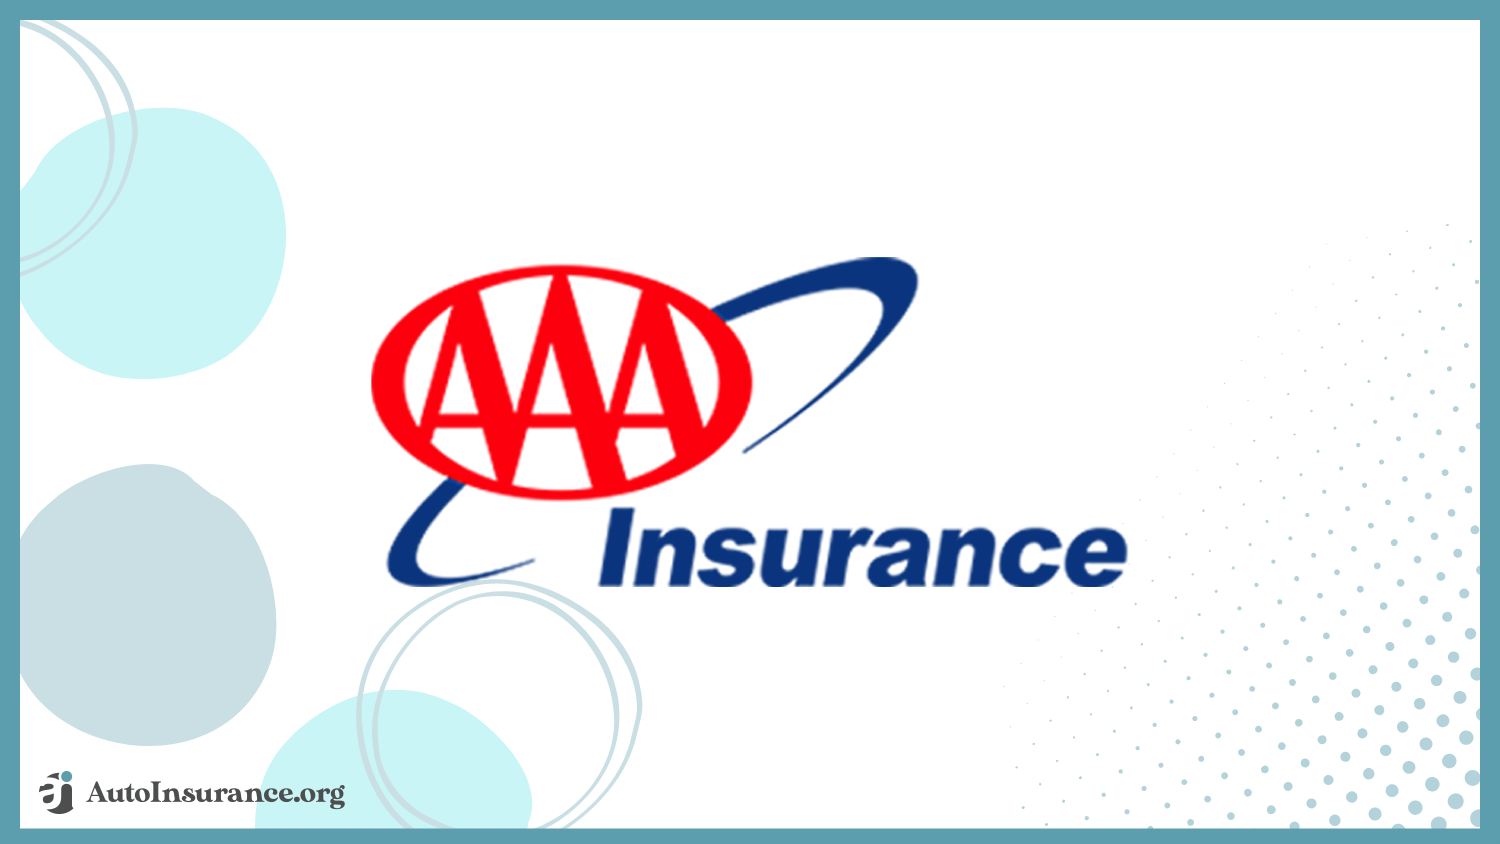 AAA: Best Auto Insurance for Regular Maintenance